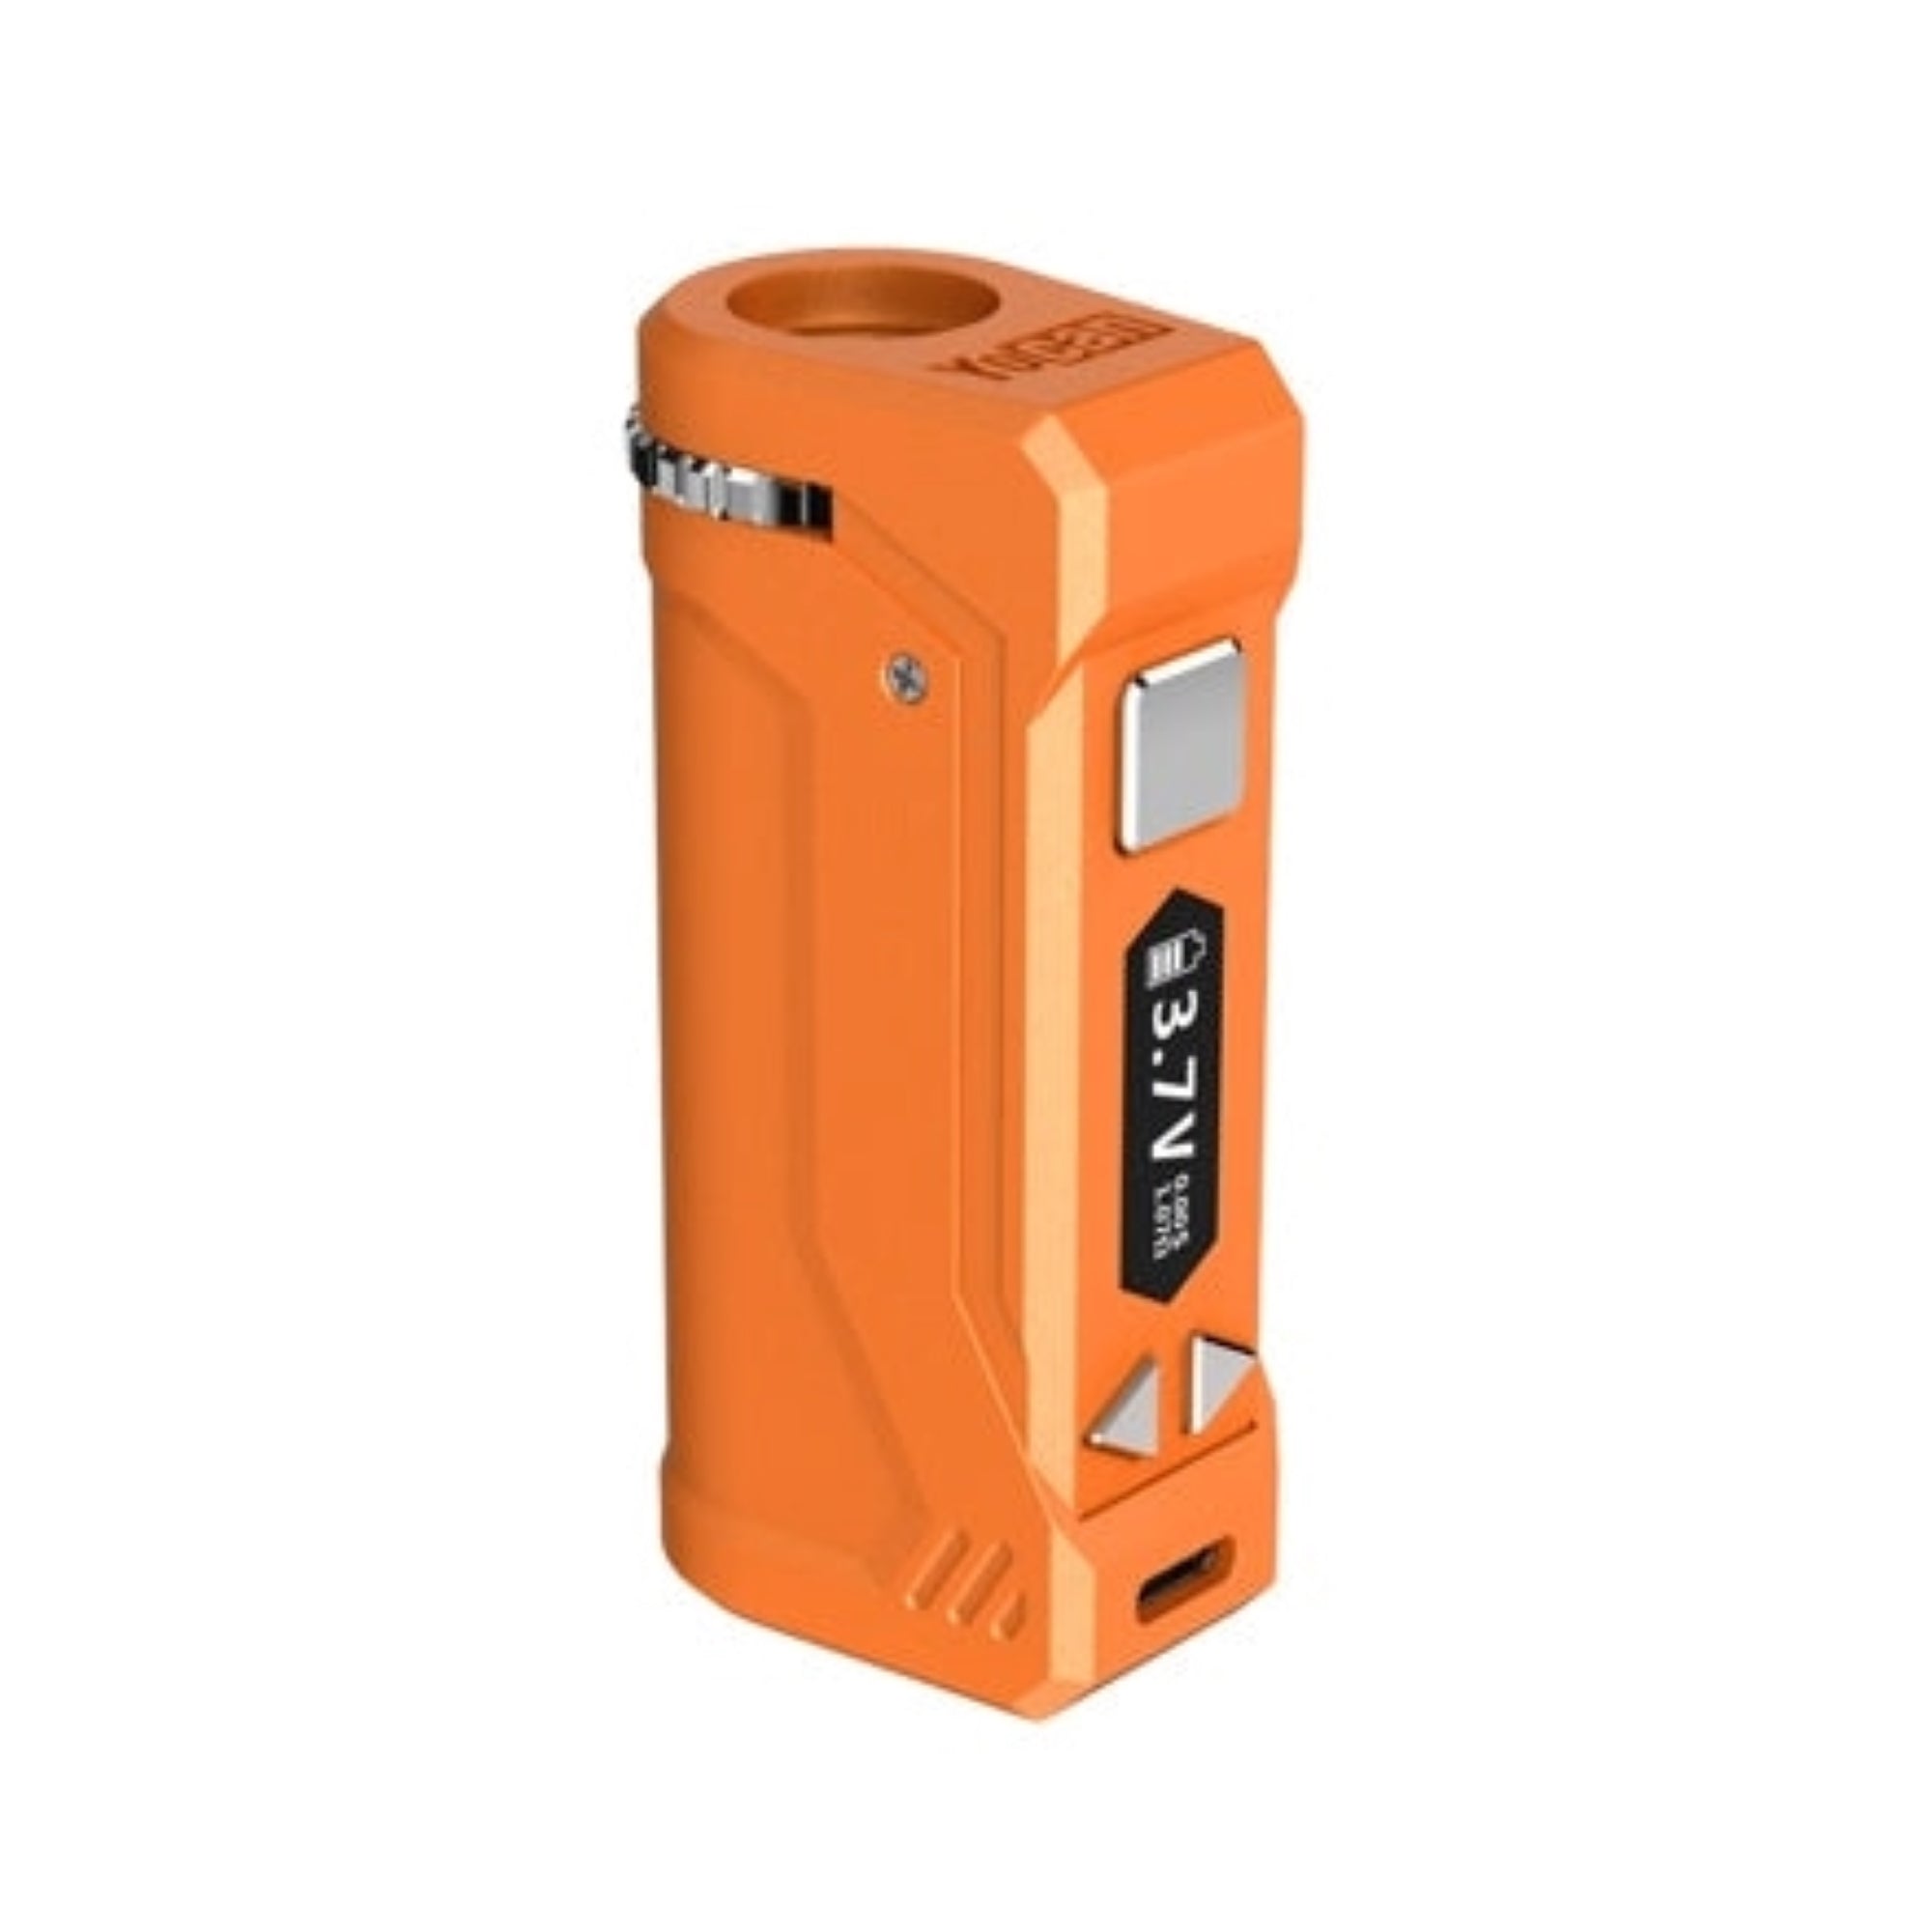 Yocan UNI PRO 2.0 - 510 Thread Battery (Free Shipping)